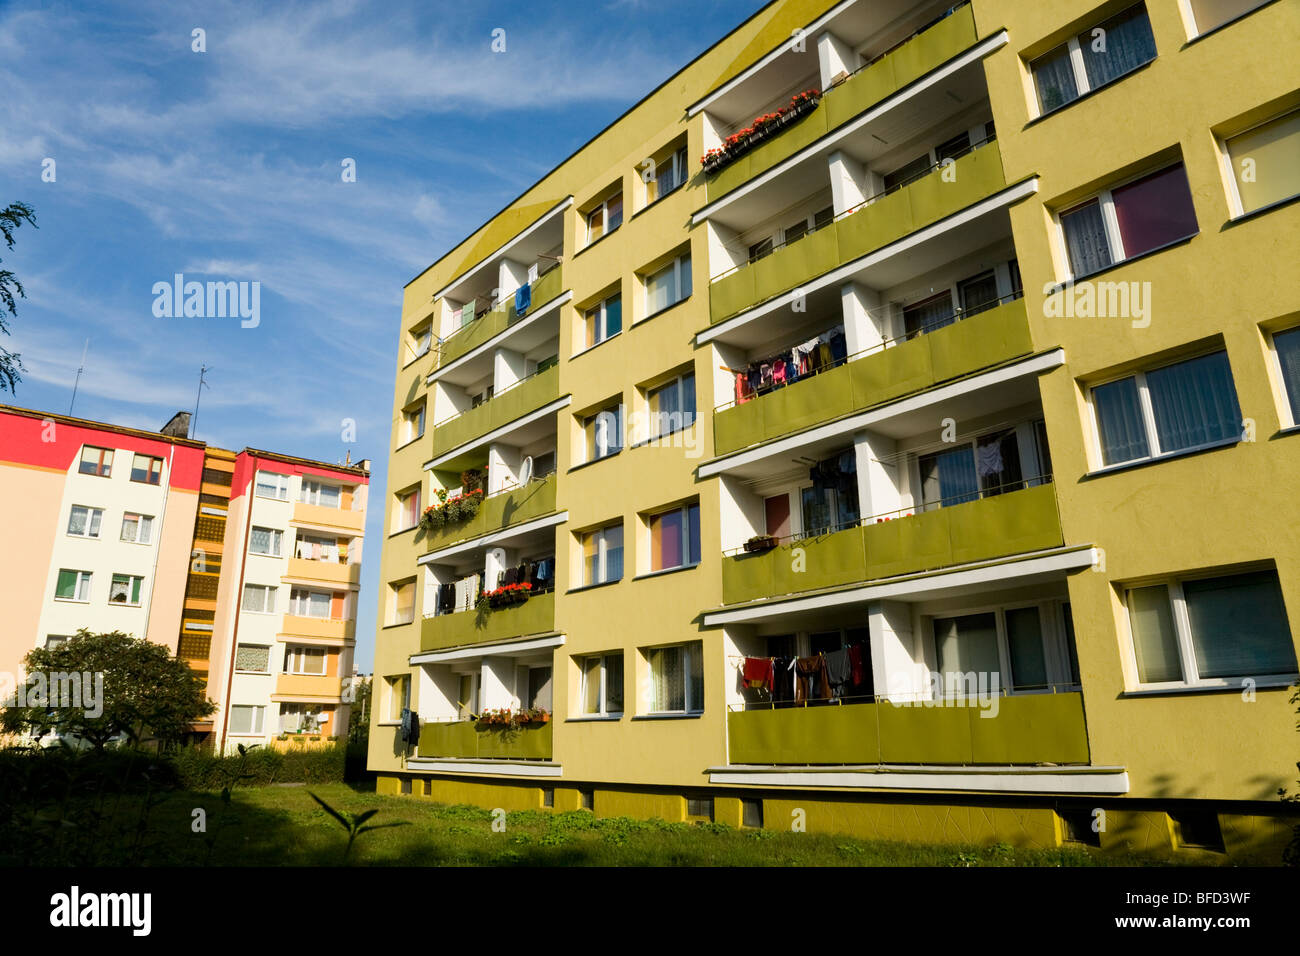 Polish residential housing blocks in the town of Kedzierzyn-Kozle. Poland. Stock Photo